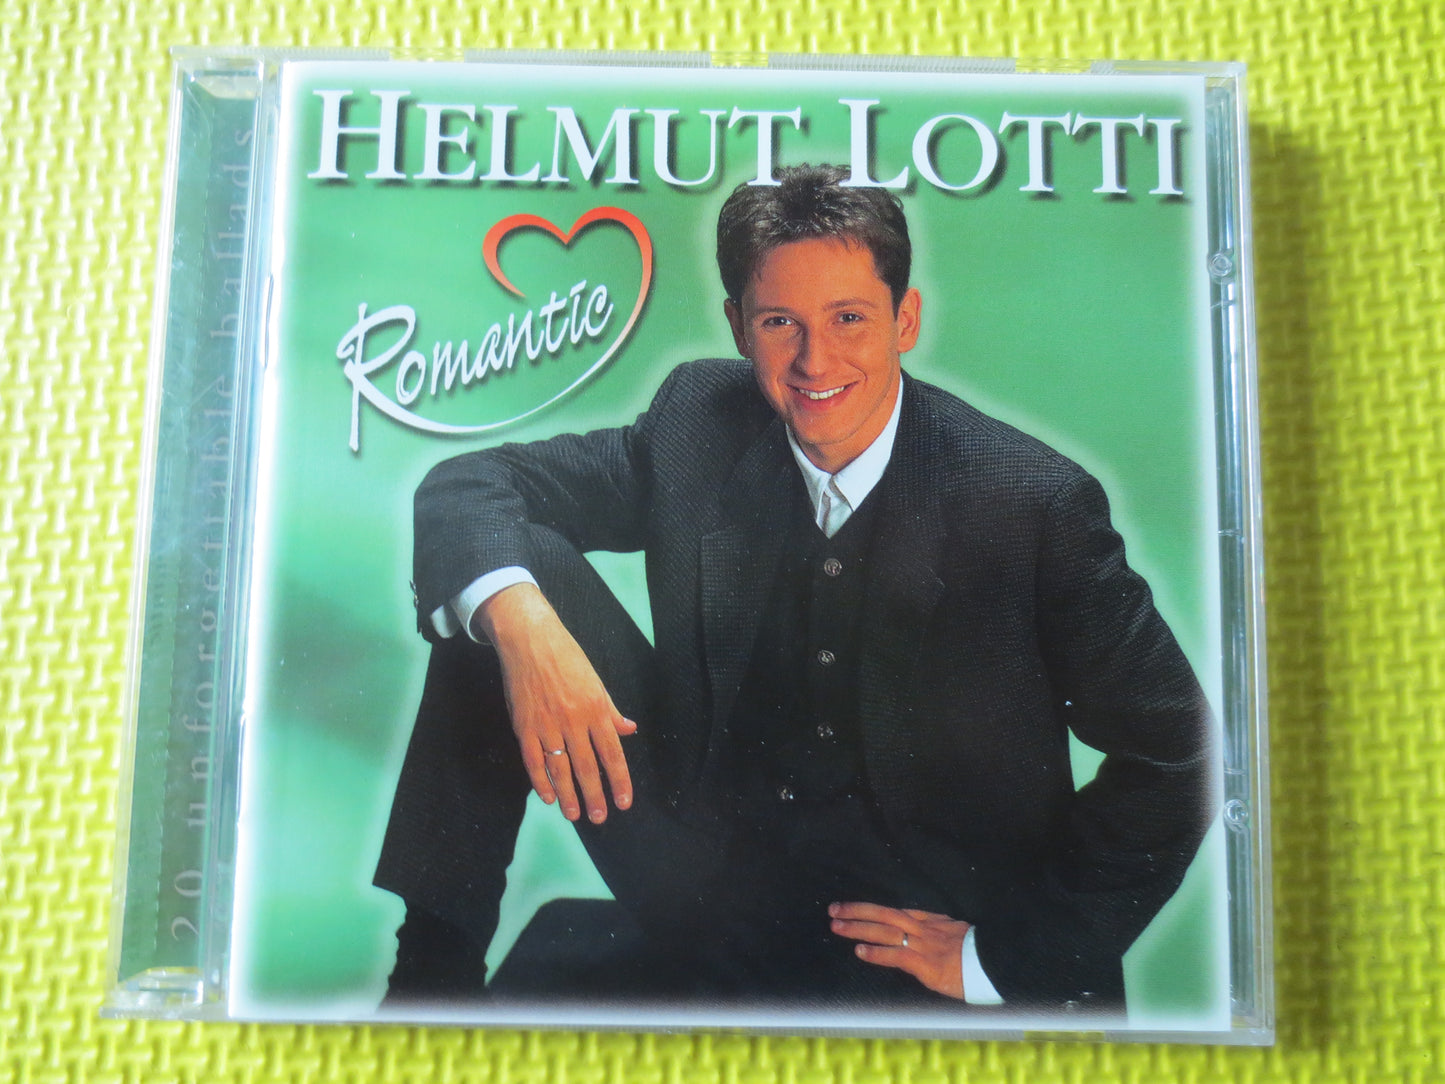 HELMUT LOTTI, ROMANTIC, Helmut Lotti Cd, Helmut Lotti Album, Jazz Compact Disc, Helmut Lotti Songs, Jazz Cd, 1998 Compact Discs